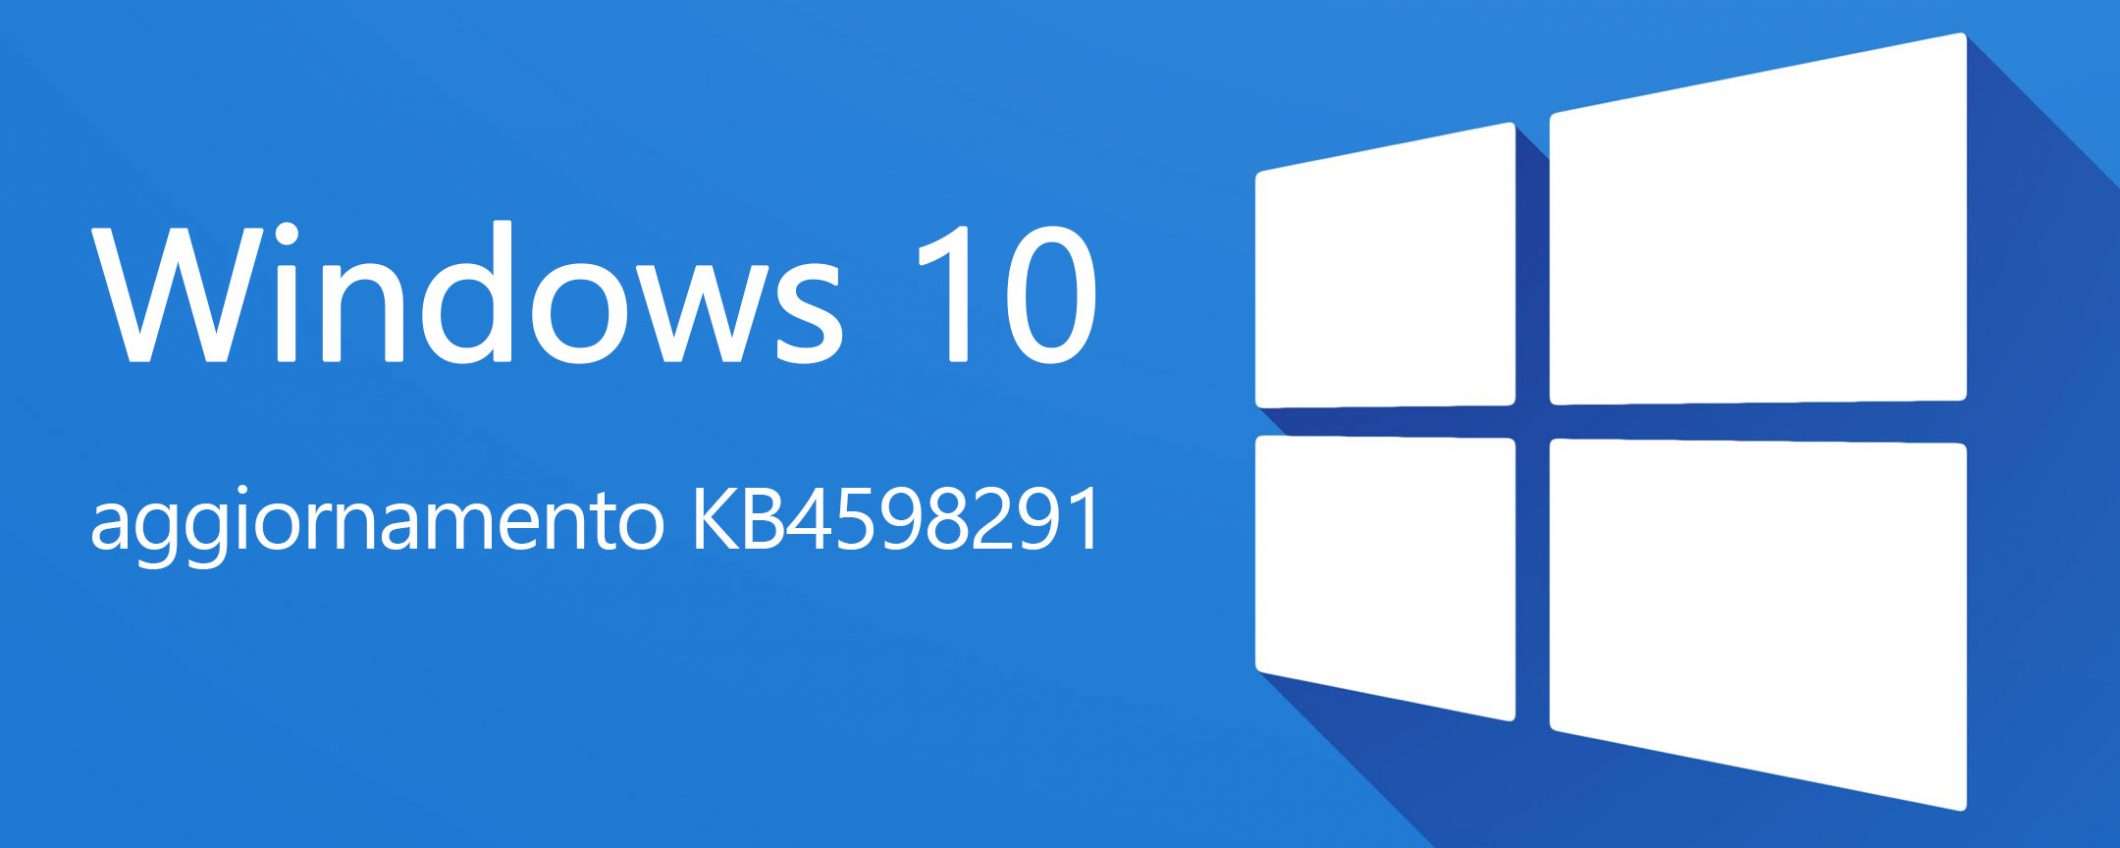 Windows 10 KB4598291 anticipa il Patch Tuesday